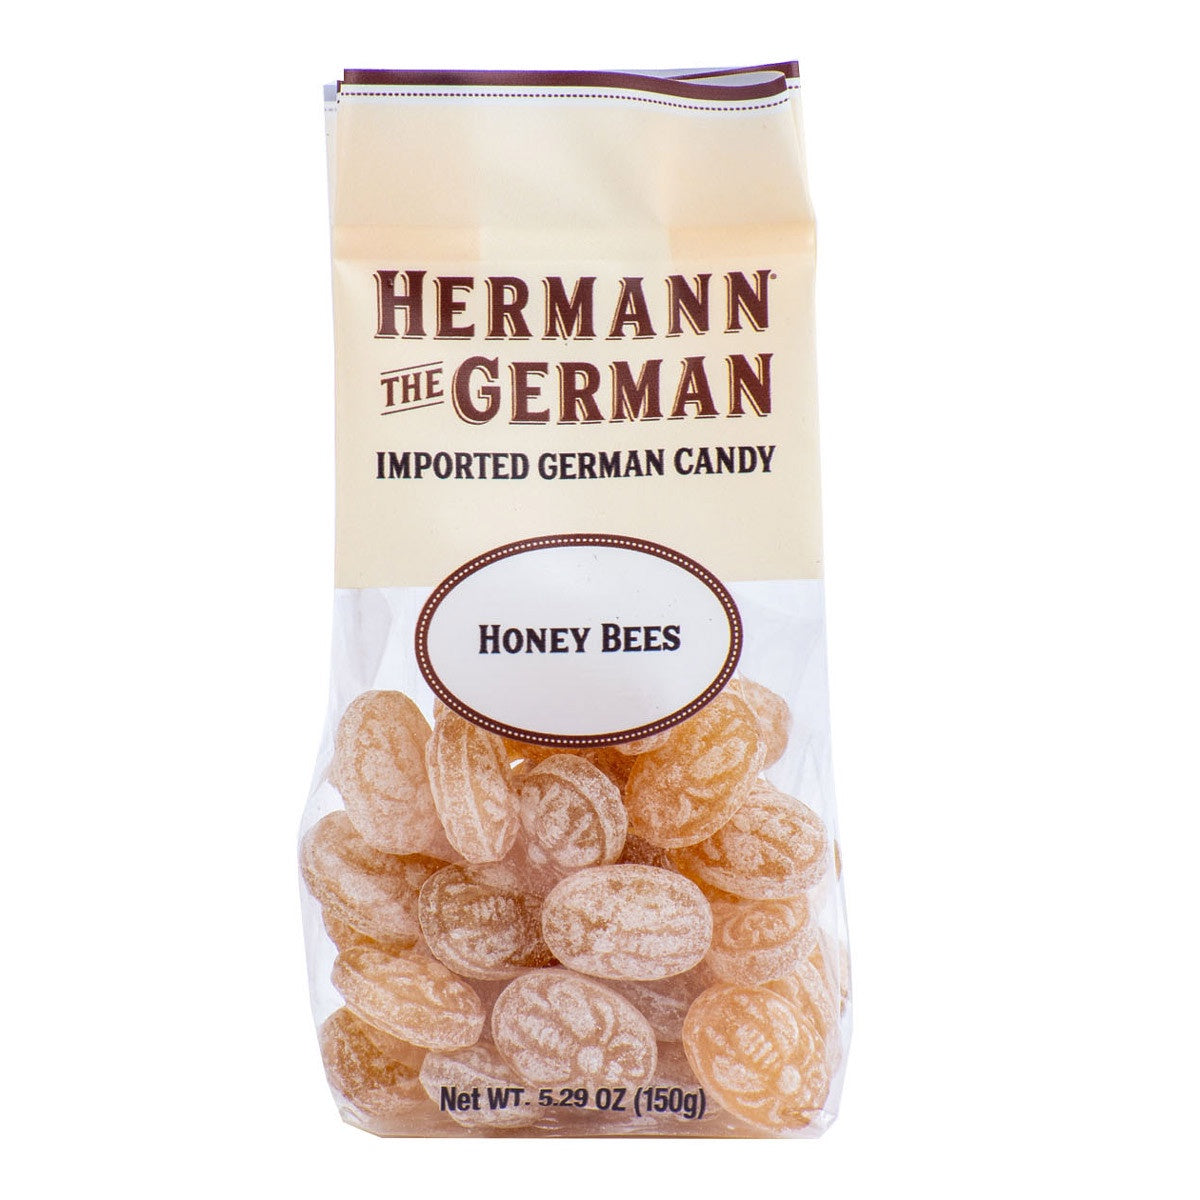 Hermann the German Honey Bees Candy, 5.29 oz.